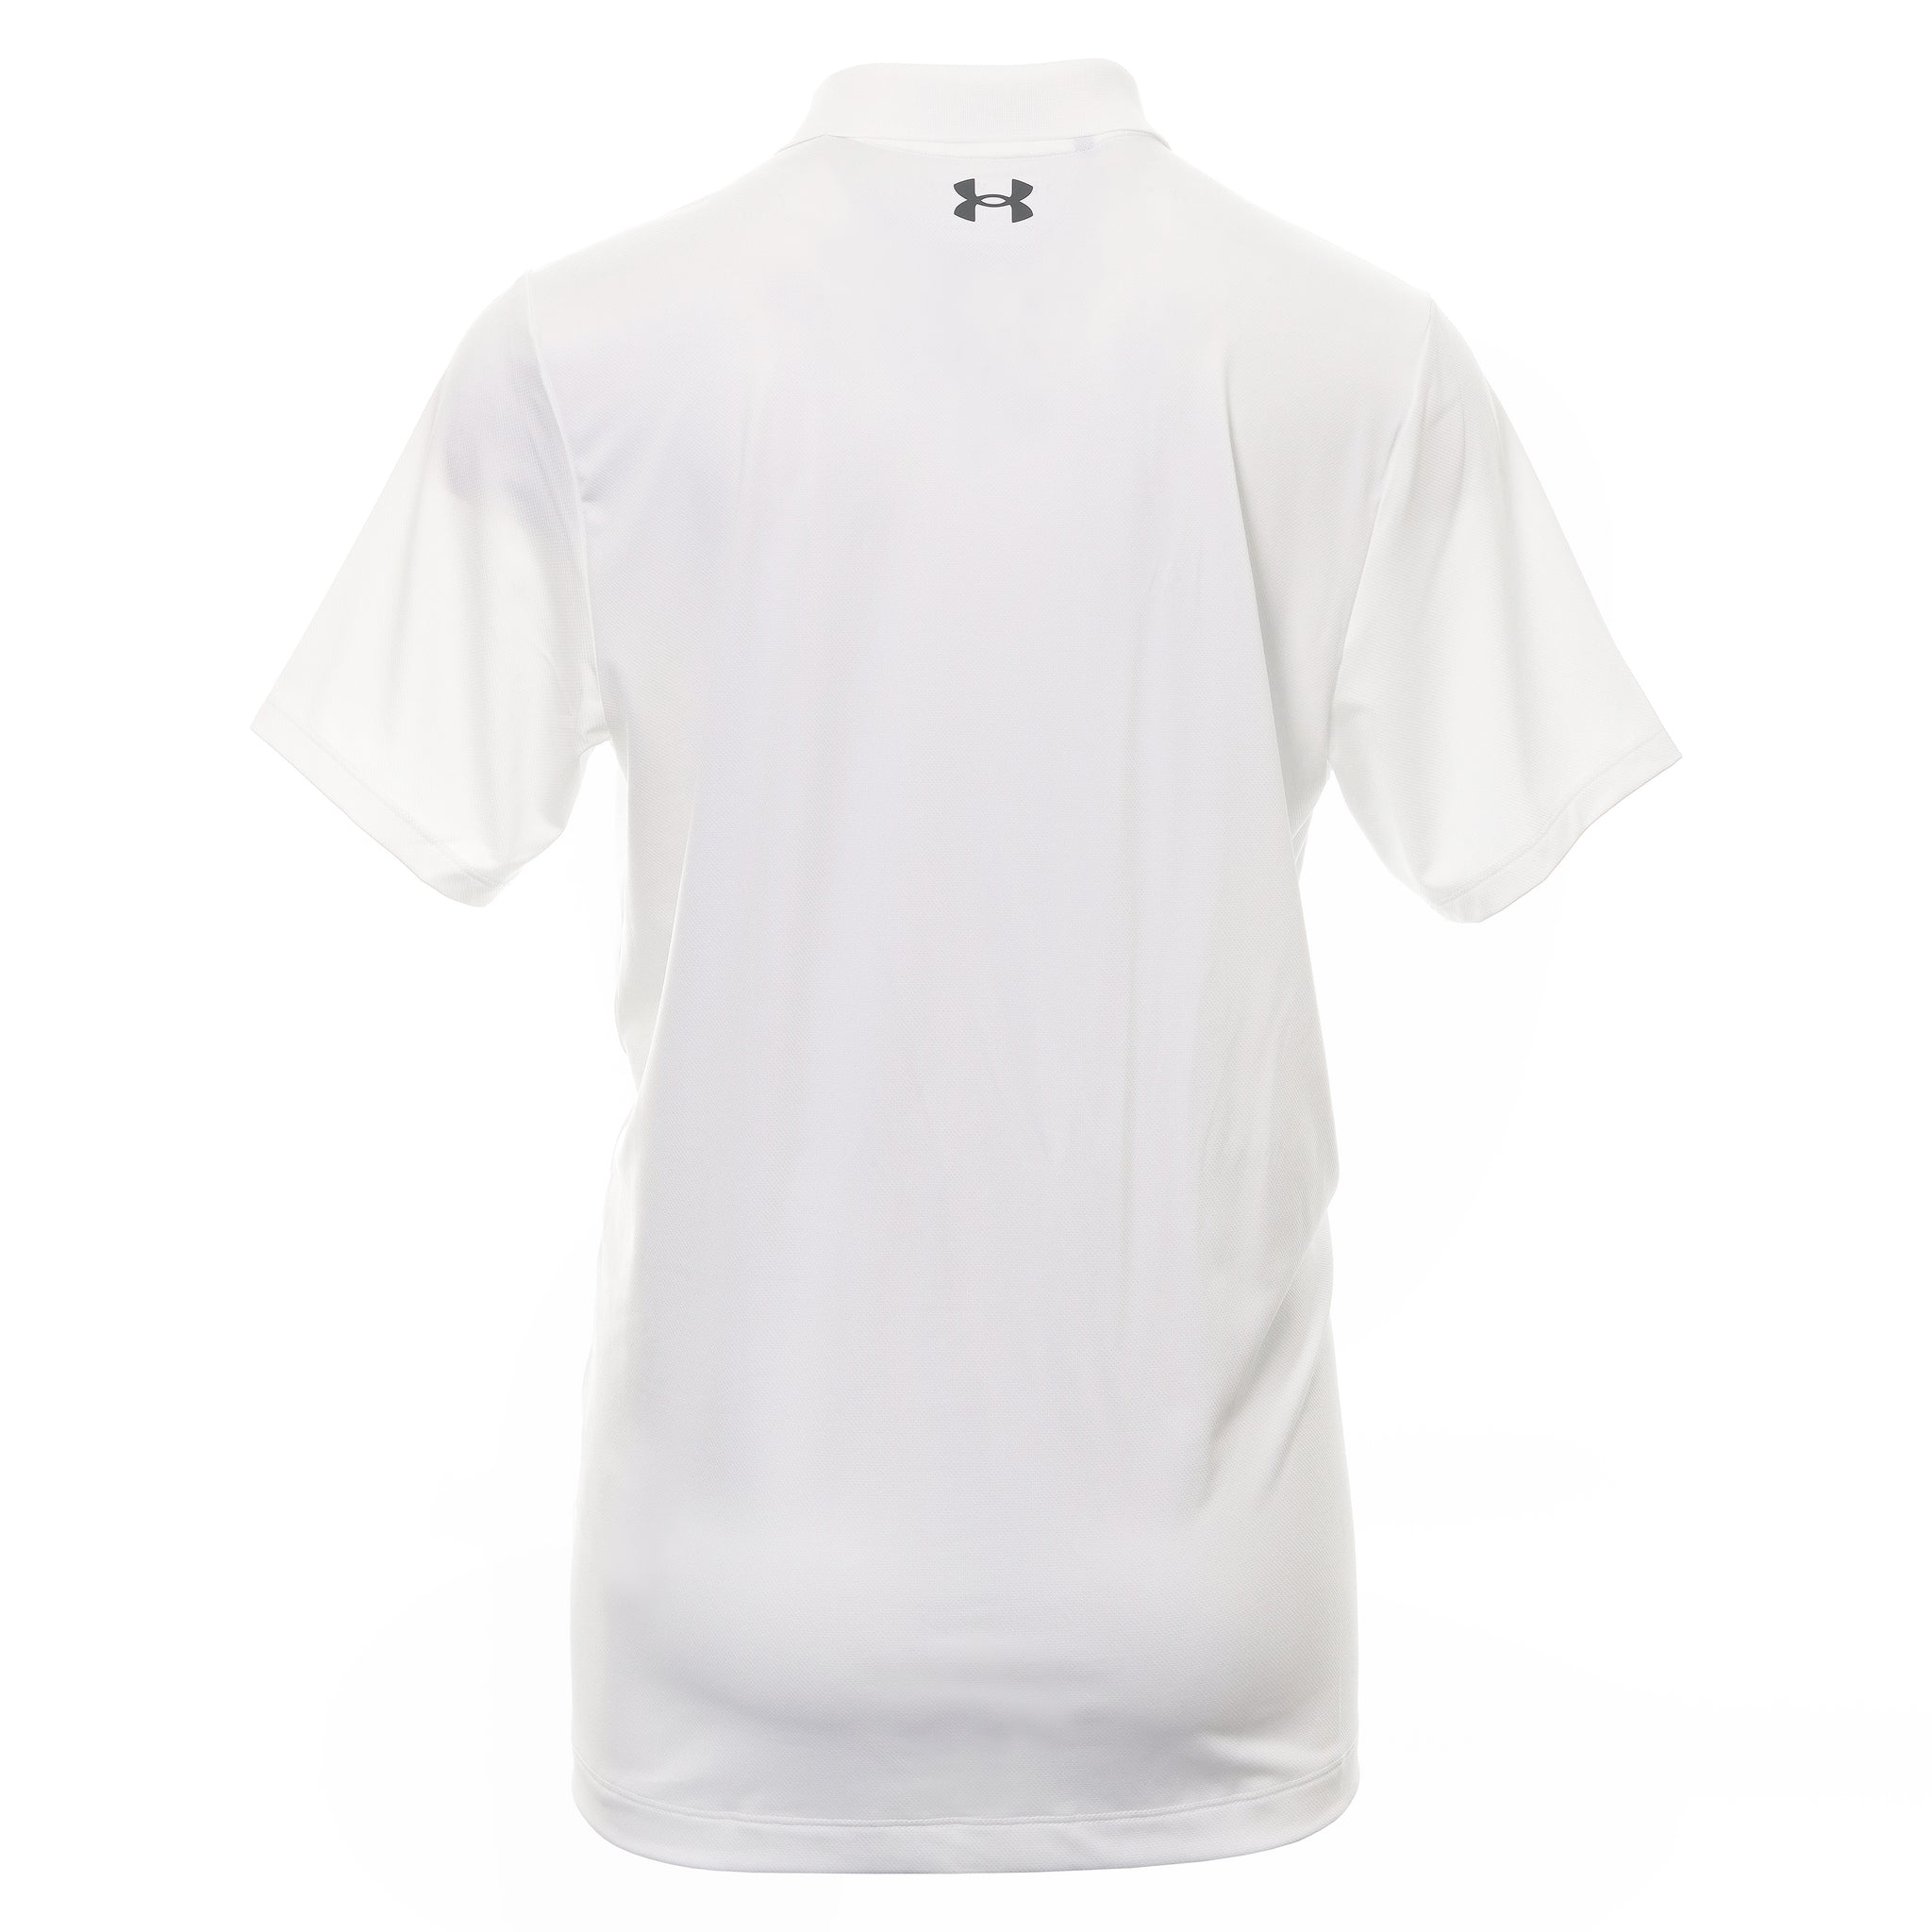 Under Armour Golf Performance 3.0 Shirt 1377374 White 100